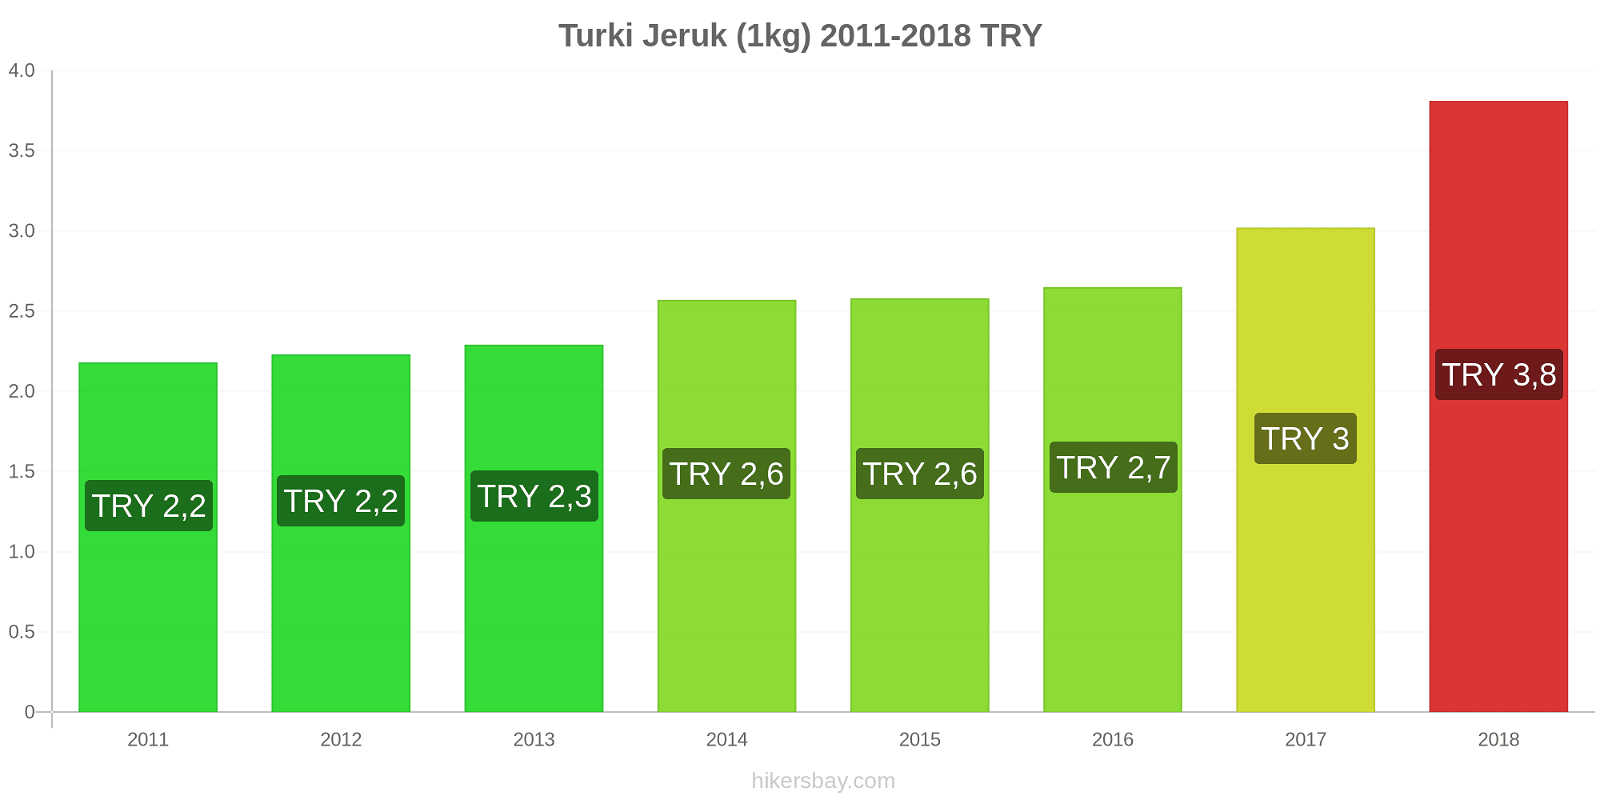 Turki perubahan harga Jeruk (1kg) hikersbay.com